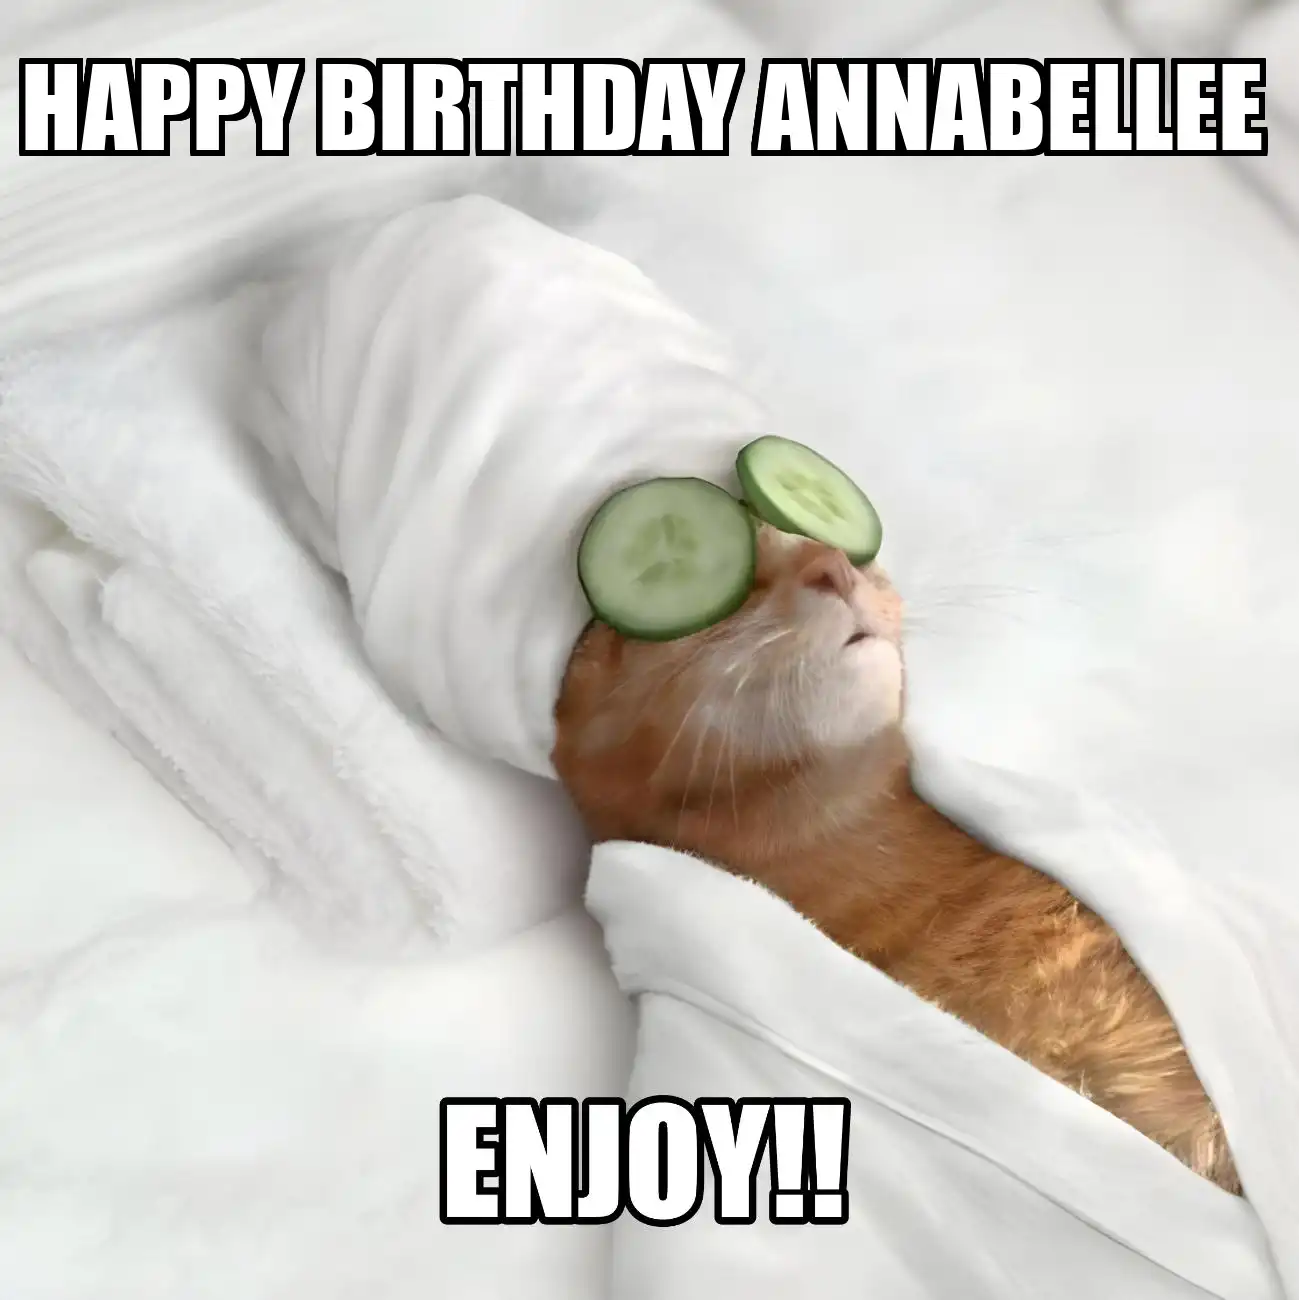 Happy Birthday Annabellee Enjoy Cat Meme